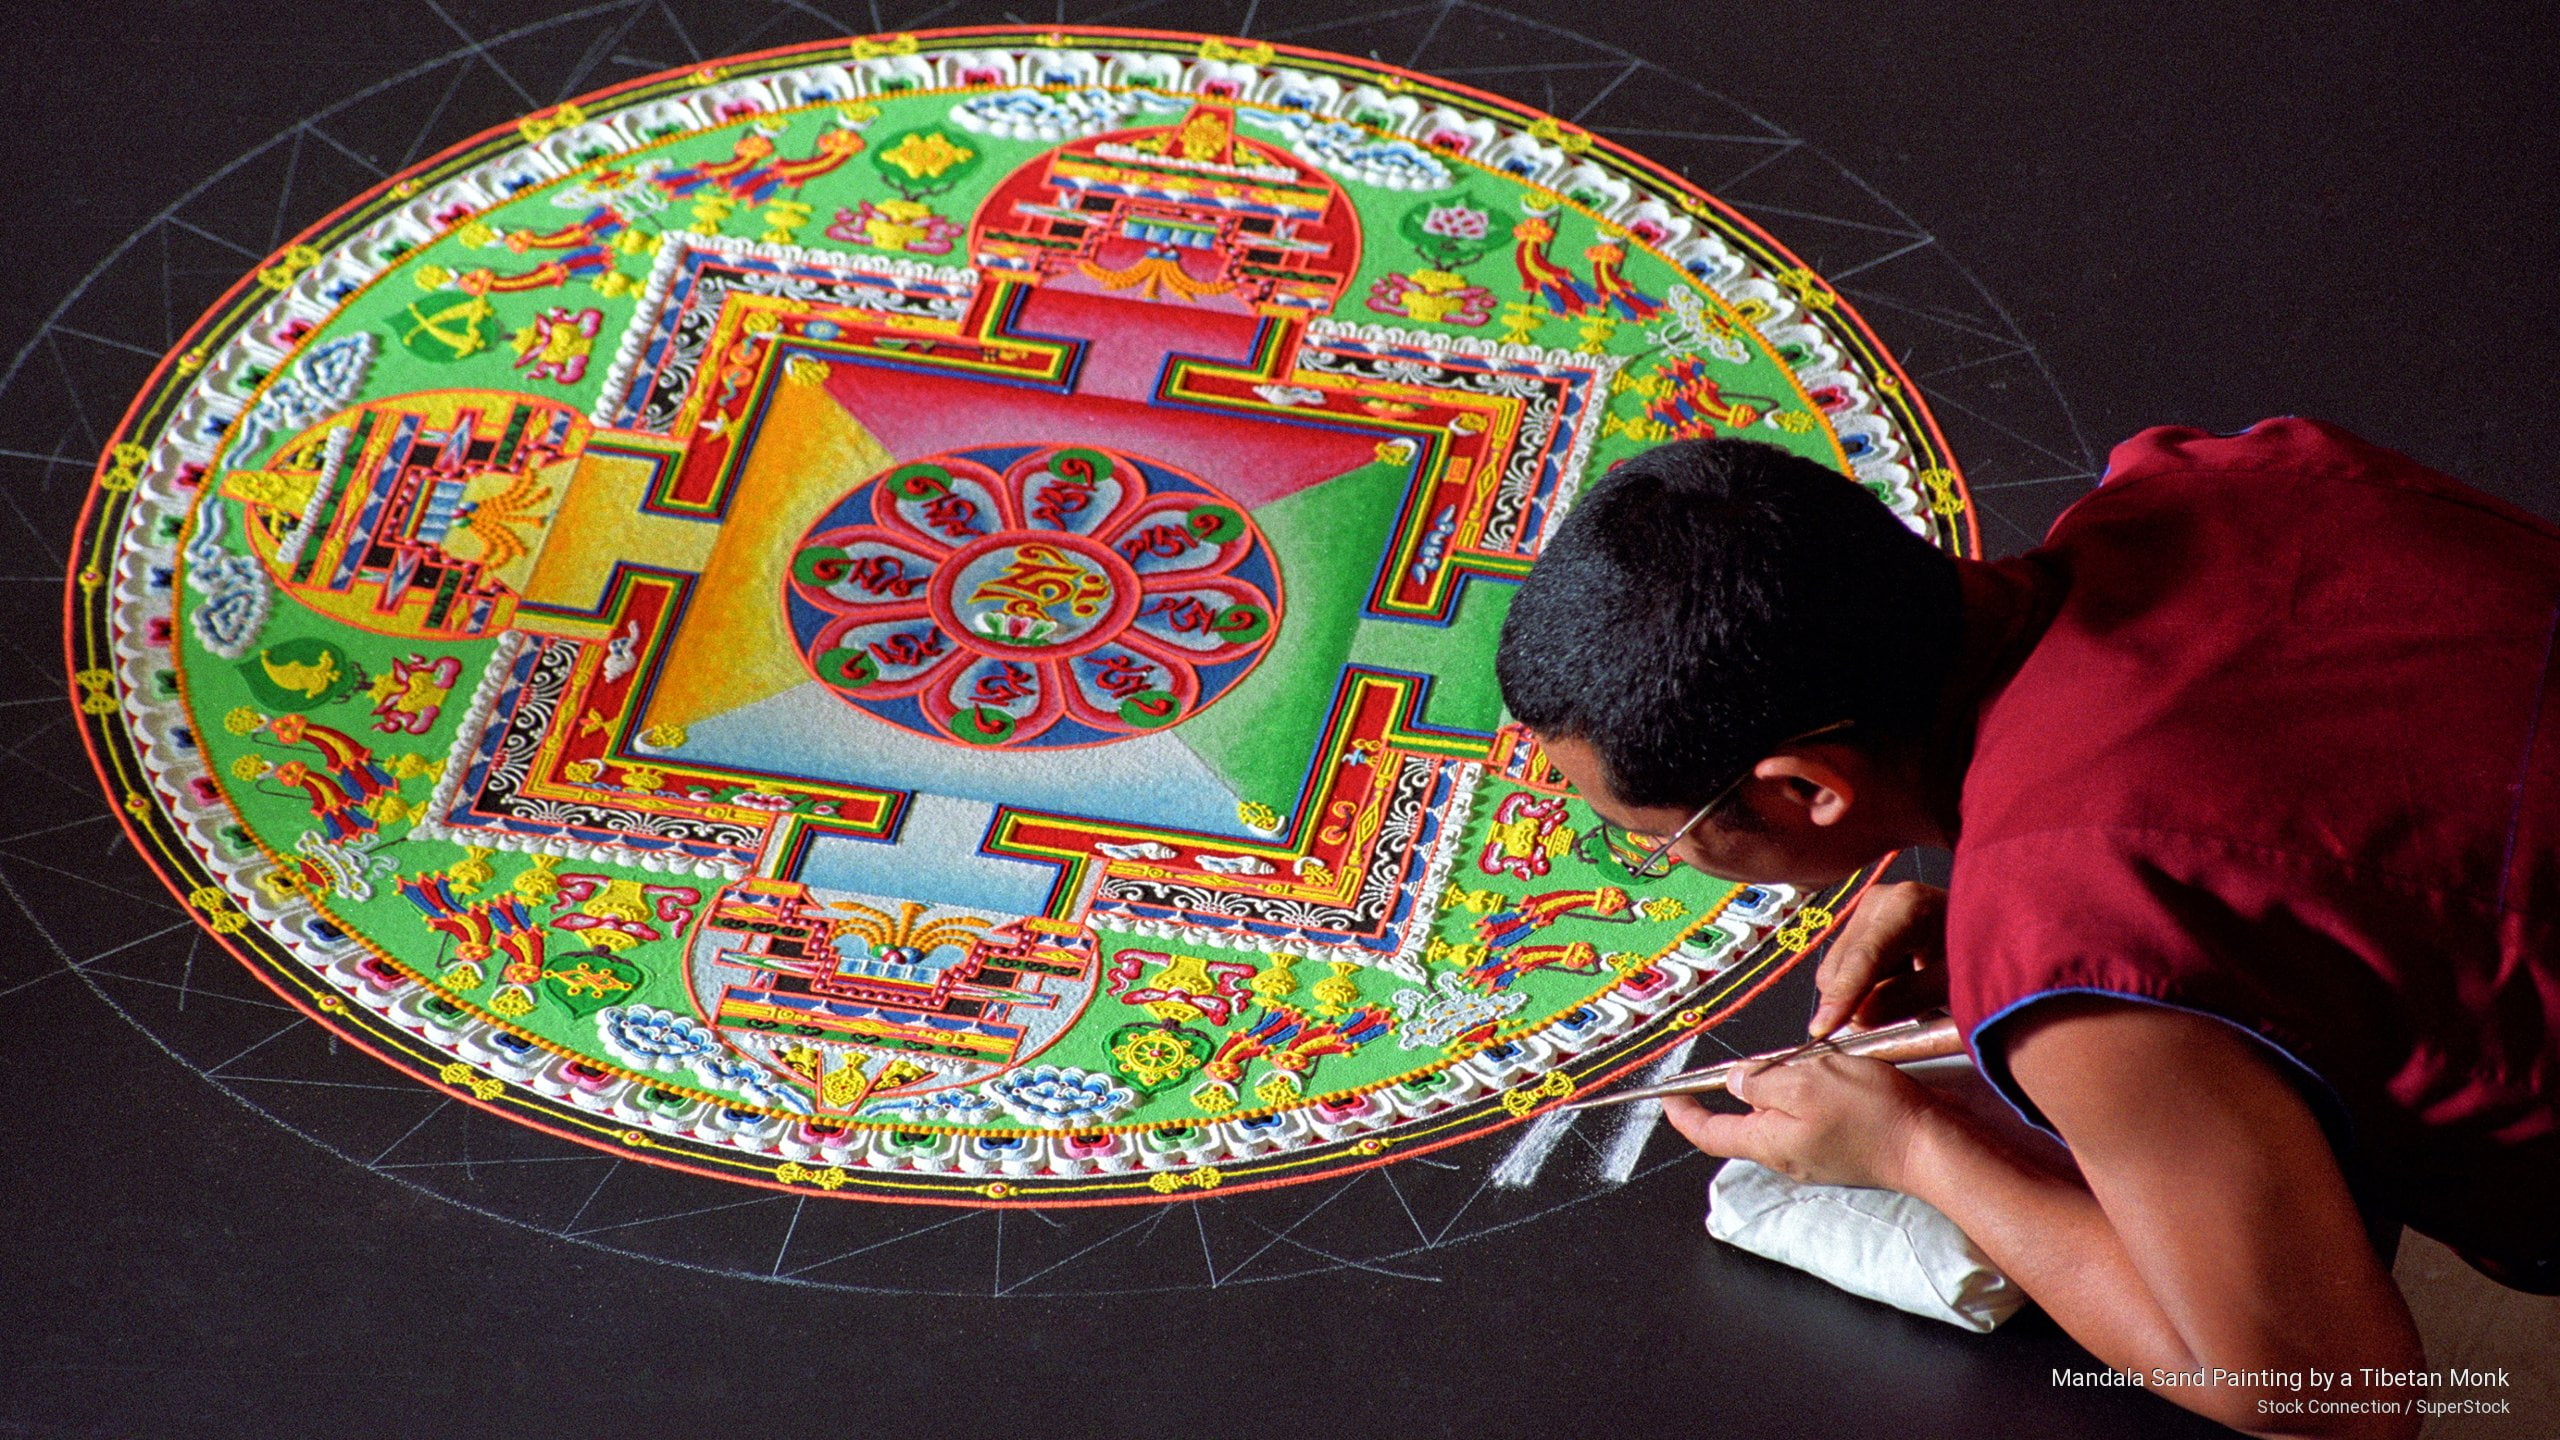 Mandala Sand Painting by a Tibetan Monk, Asia